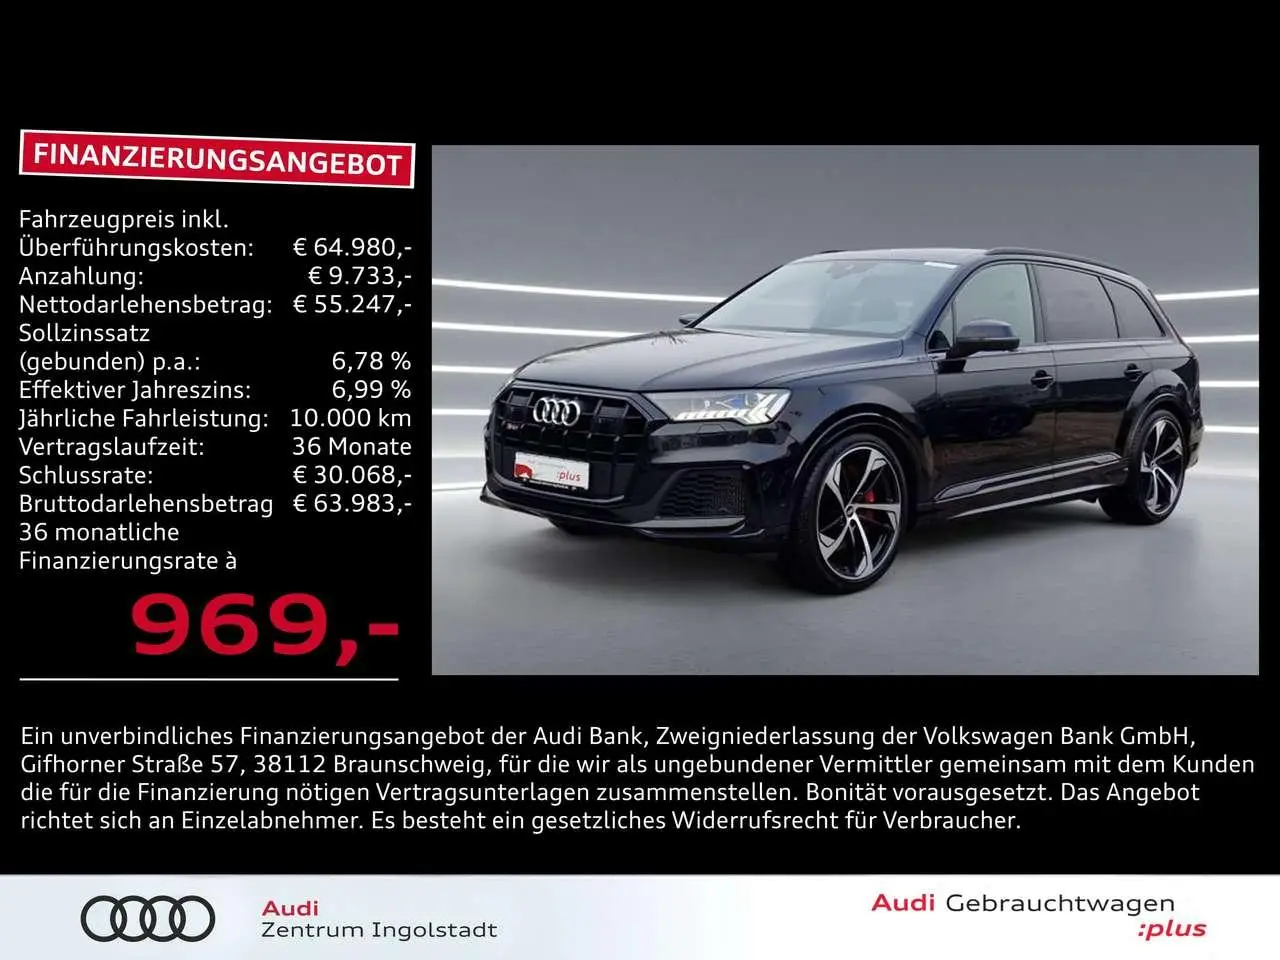 Photo 1 : Audi Sq7 2020 Diesel